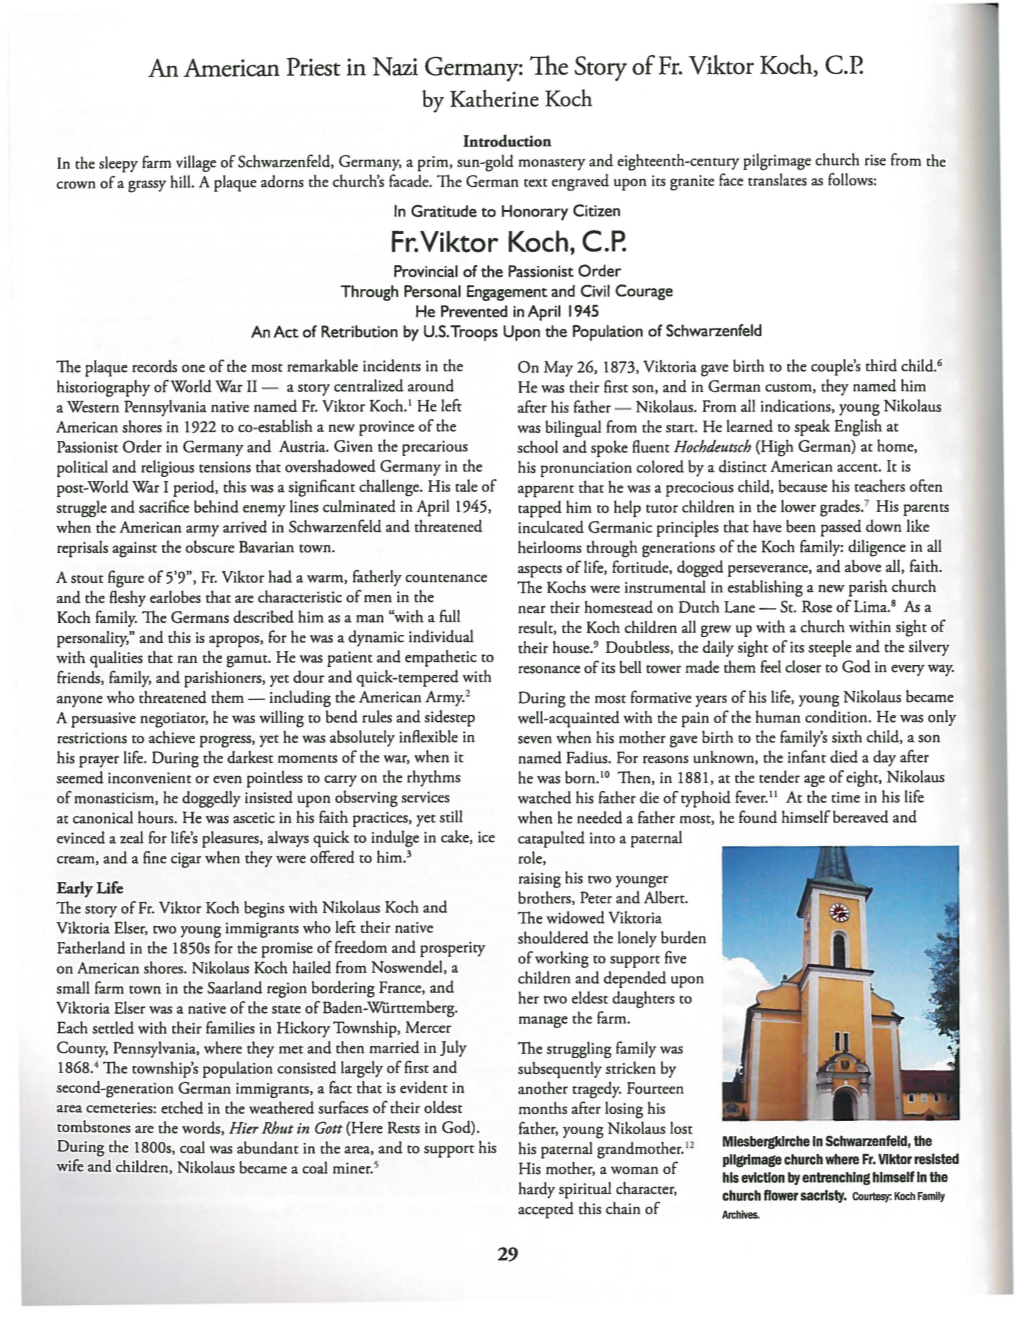 An American Priest in Nazi Germany: the Story of Fr. Viktor Koch, C.P. by Katherine Koch